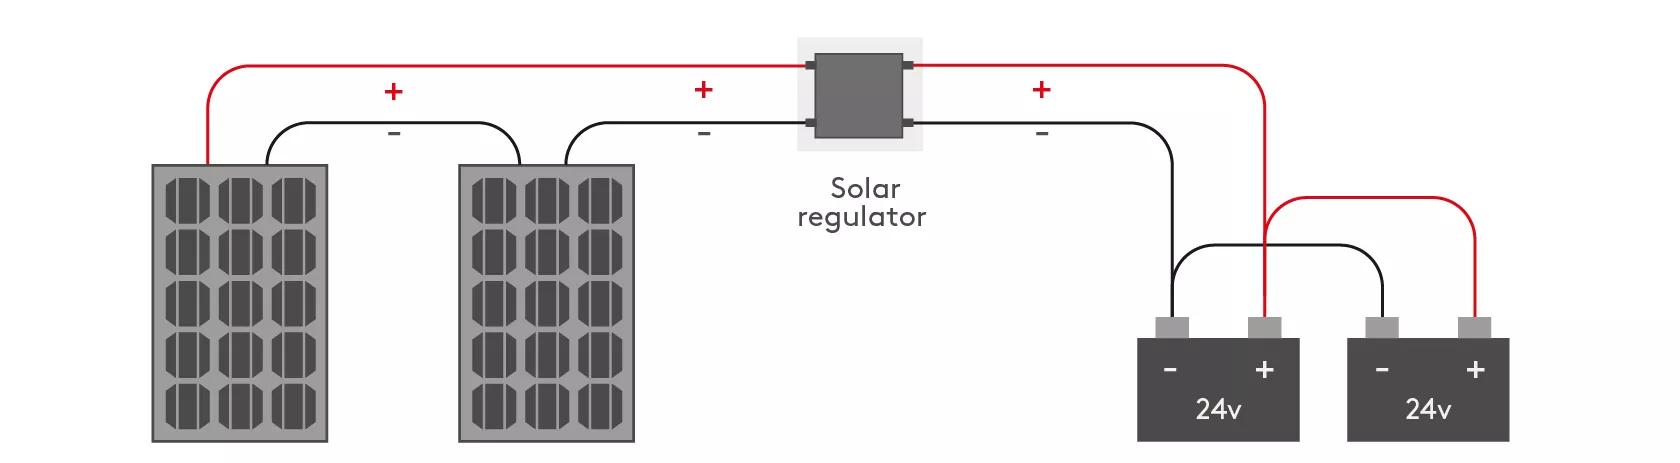 Wiring 12v solar panels to 24v batteries diagram